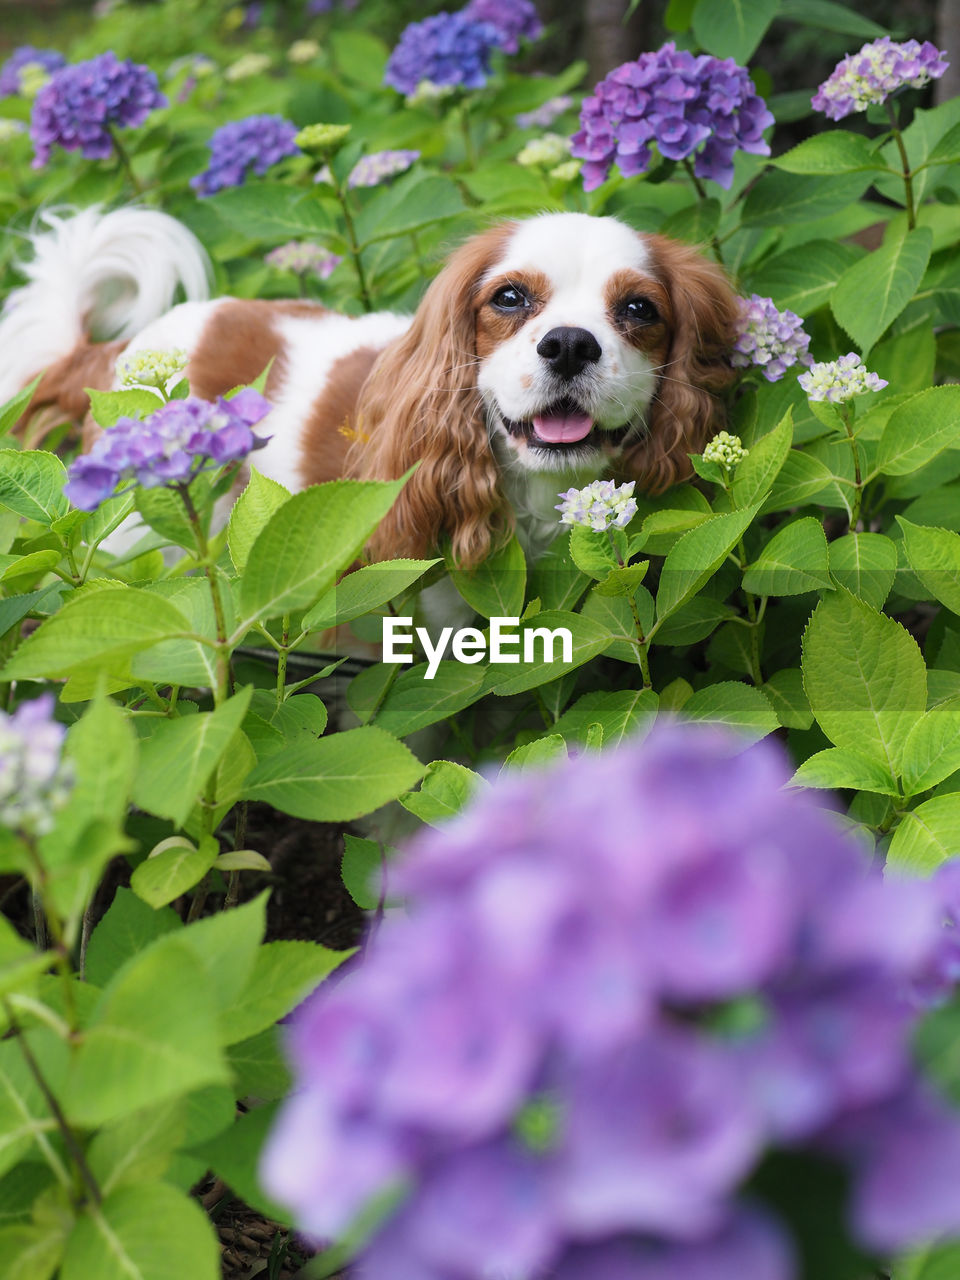 PORTRAIT OF A DOG ON PURPLE FLOWERING PLANT